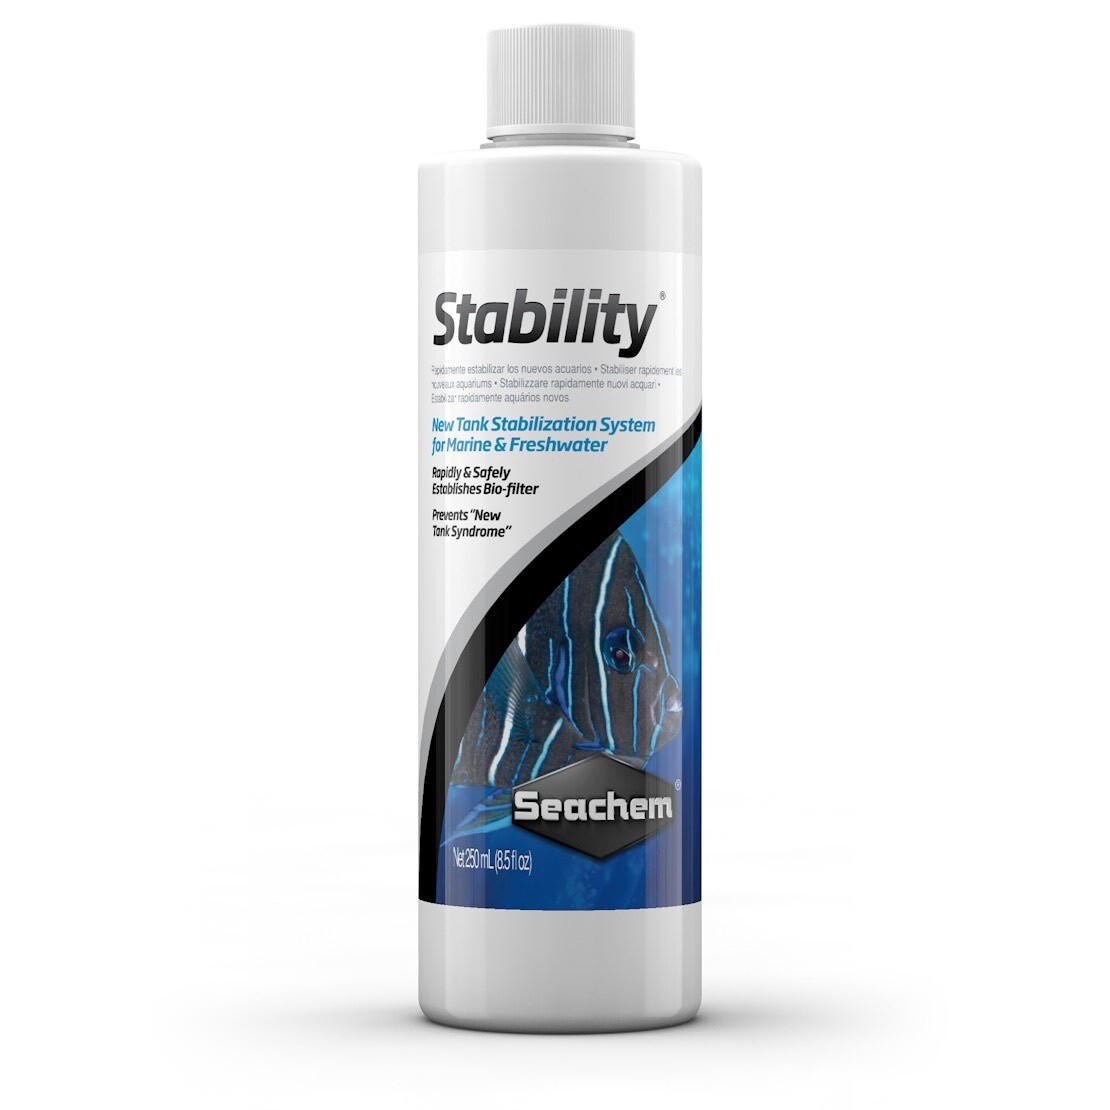 Seachem Stability, volume: Seachem Stability 250ml Bacteria Bottle